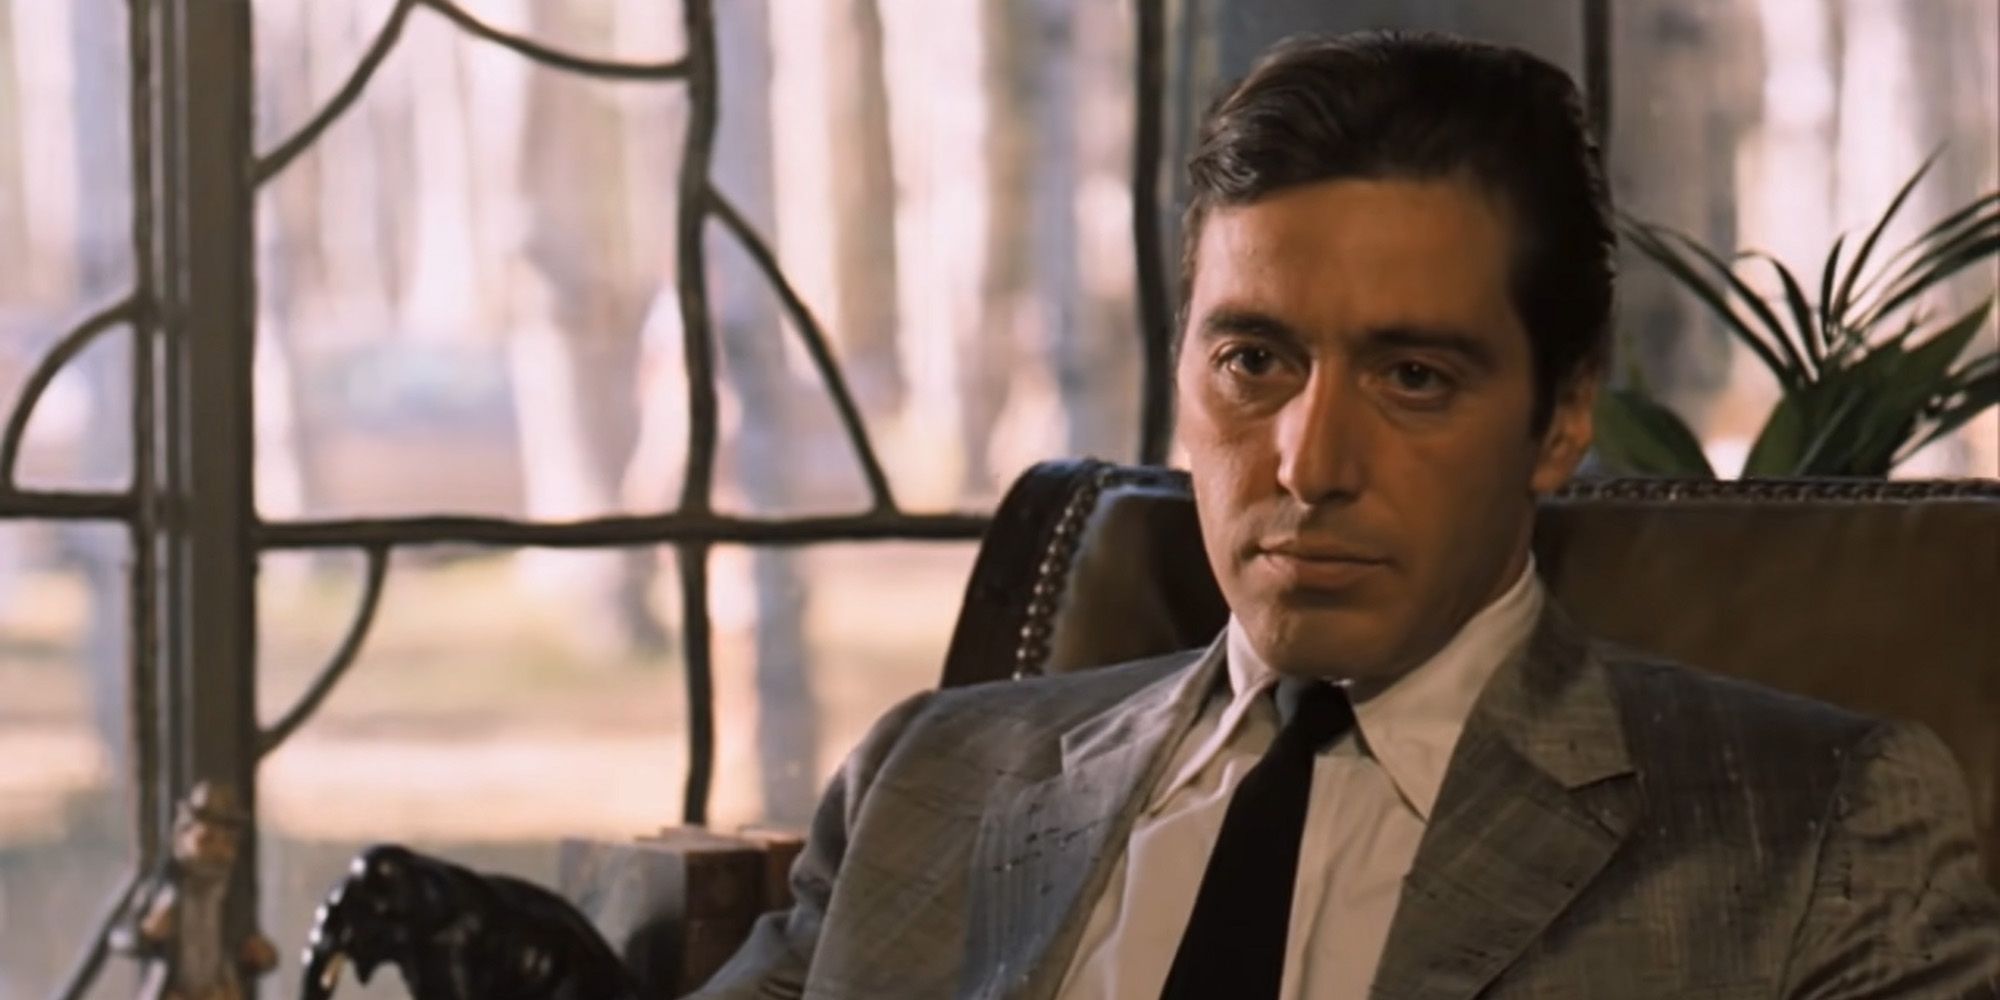 Al Pacino in The Godfather II